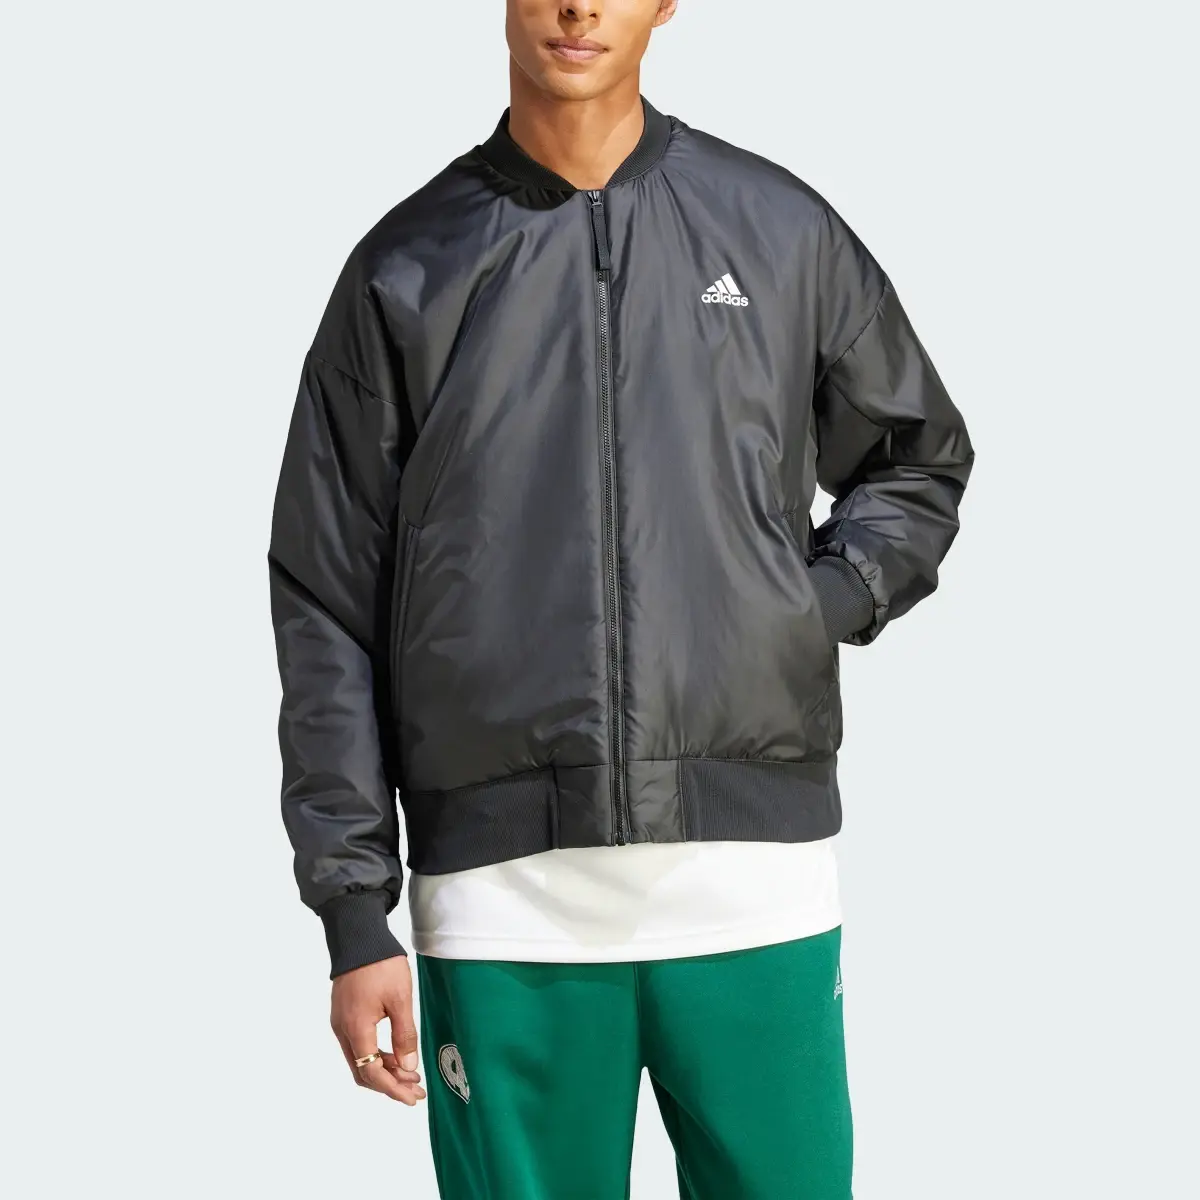 Adidas Brand Love Bomber Jacket. 1